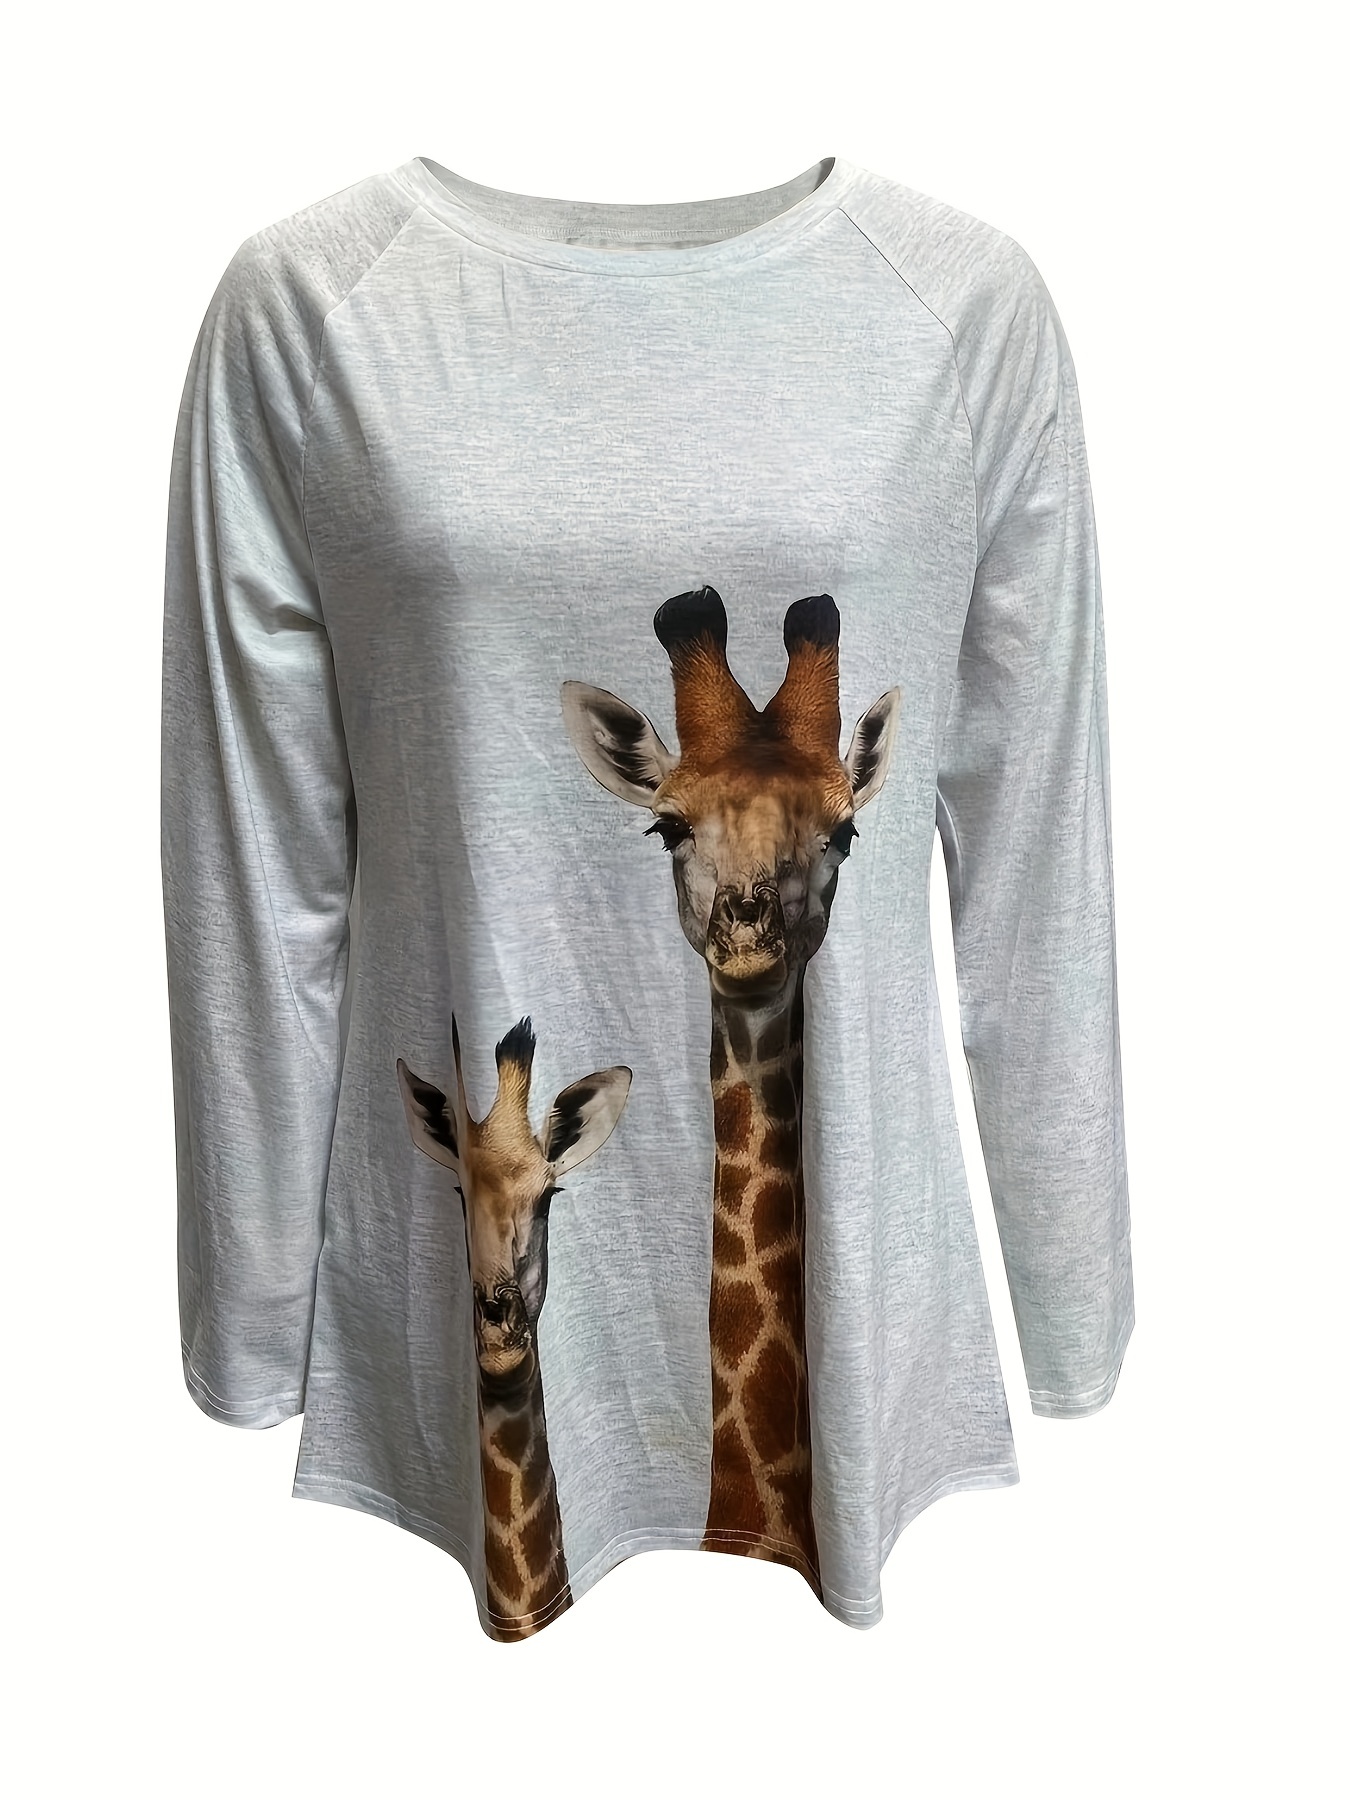 Giraffe Print Crew Neck T Shirt Casual Long Sleeve Top Womens